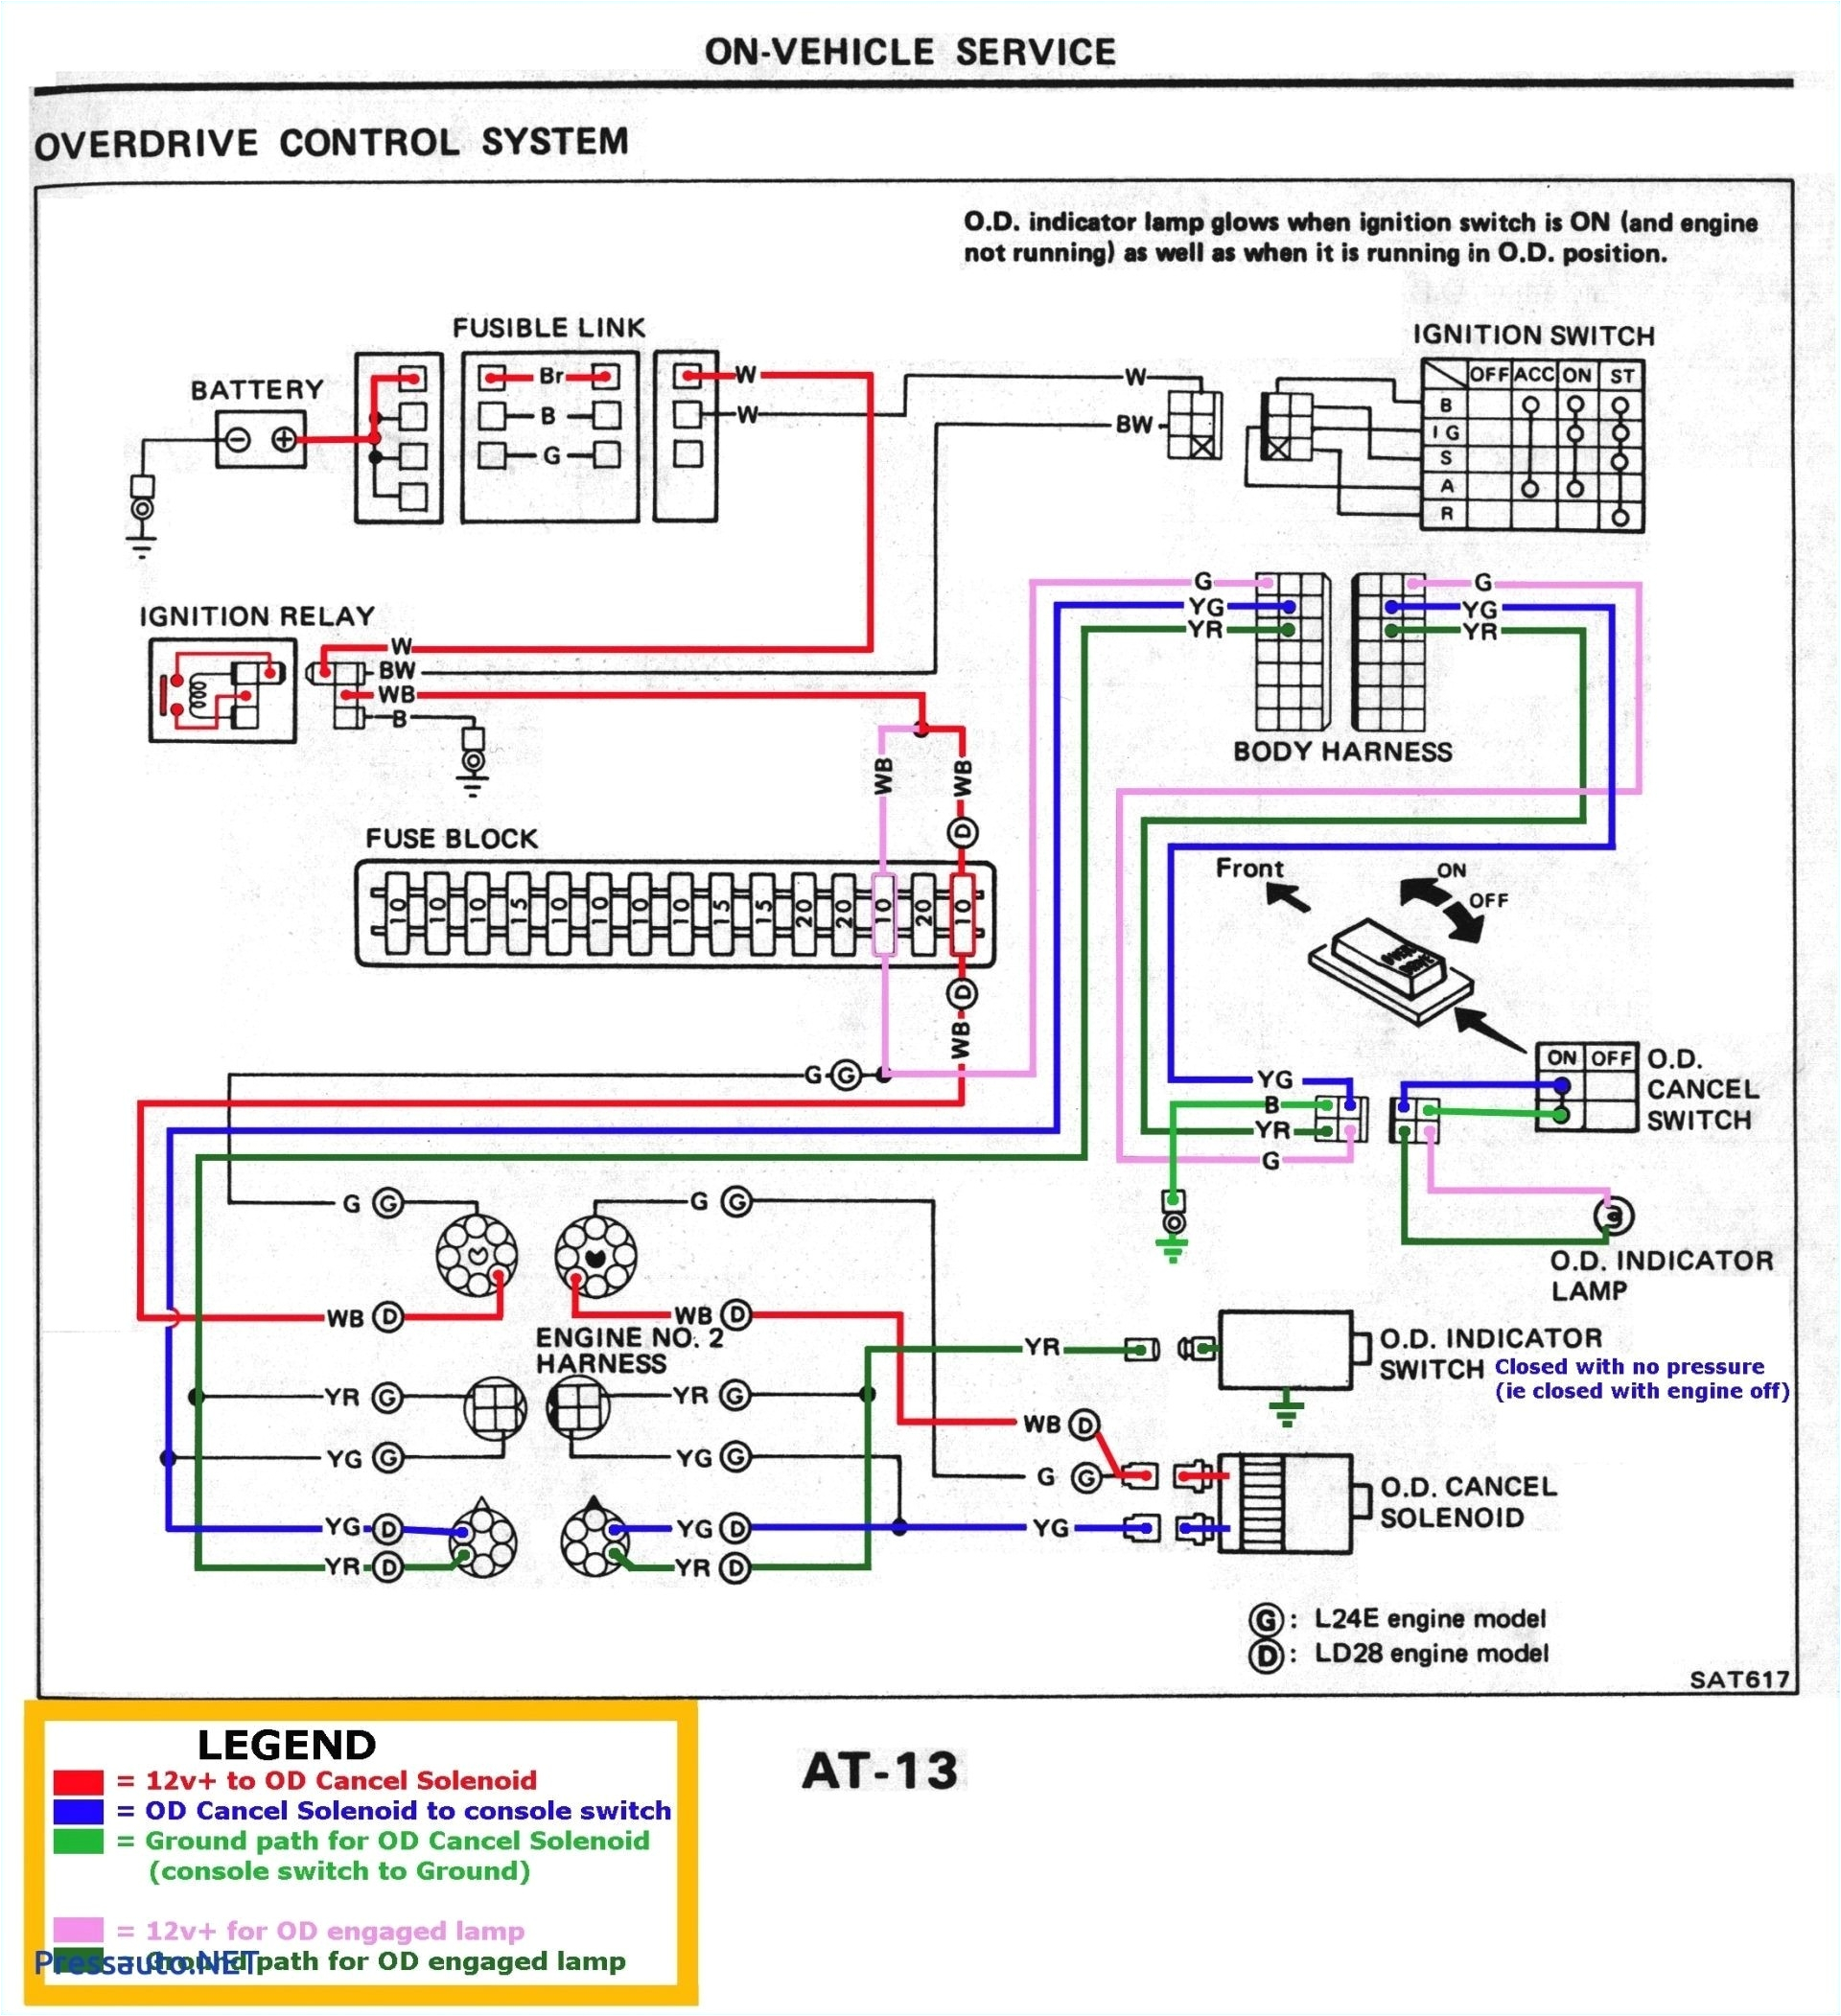 denso alternator wiring schematic wiring diagram for nippondenso alternator best alternator wiring diagram tachometer best wiring diagram chevy 2o jpg